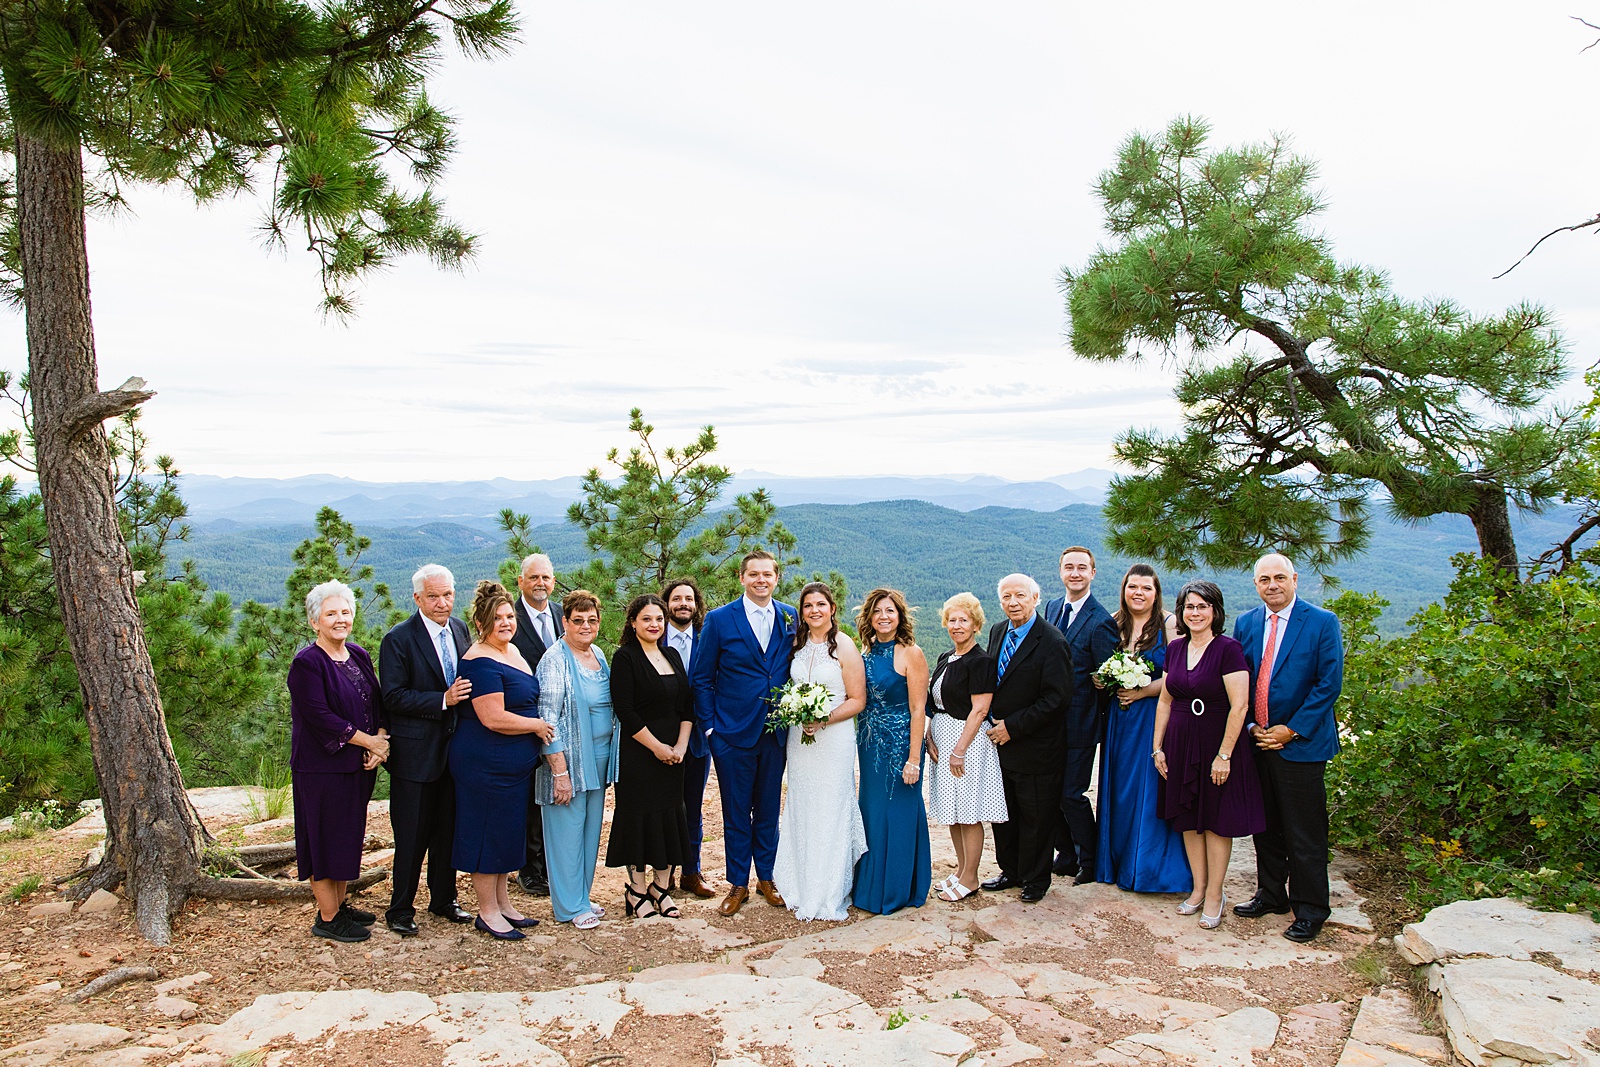 Family photos at Mogollon Rim wedding ceremony by Arizona elopement photographer Juniper and Co Photography.